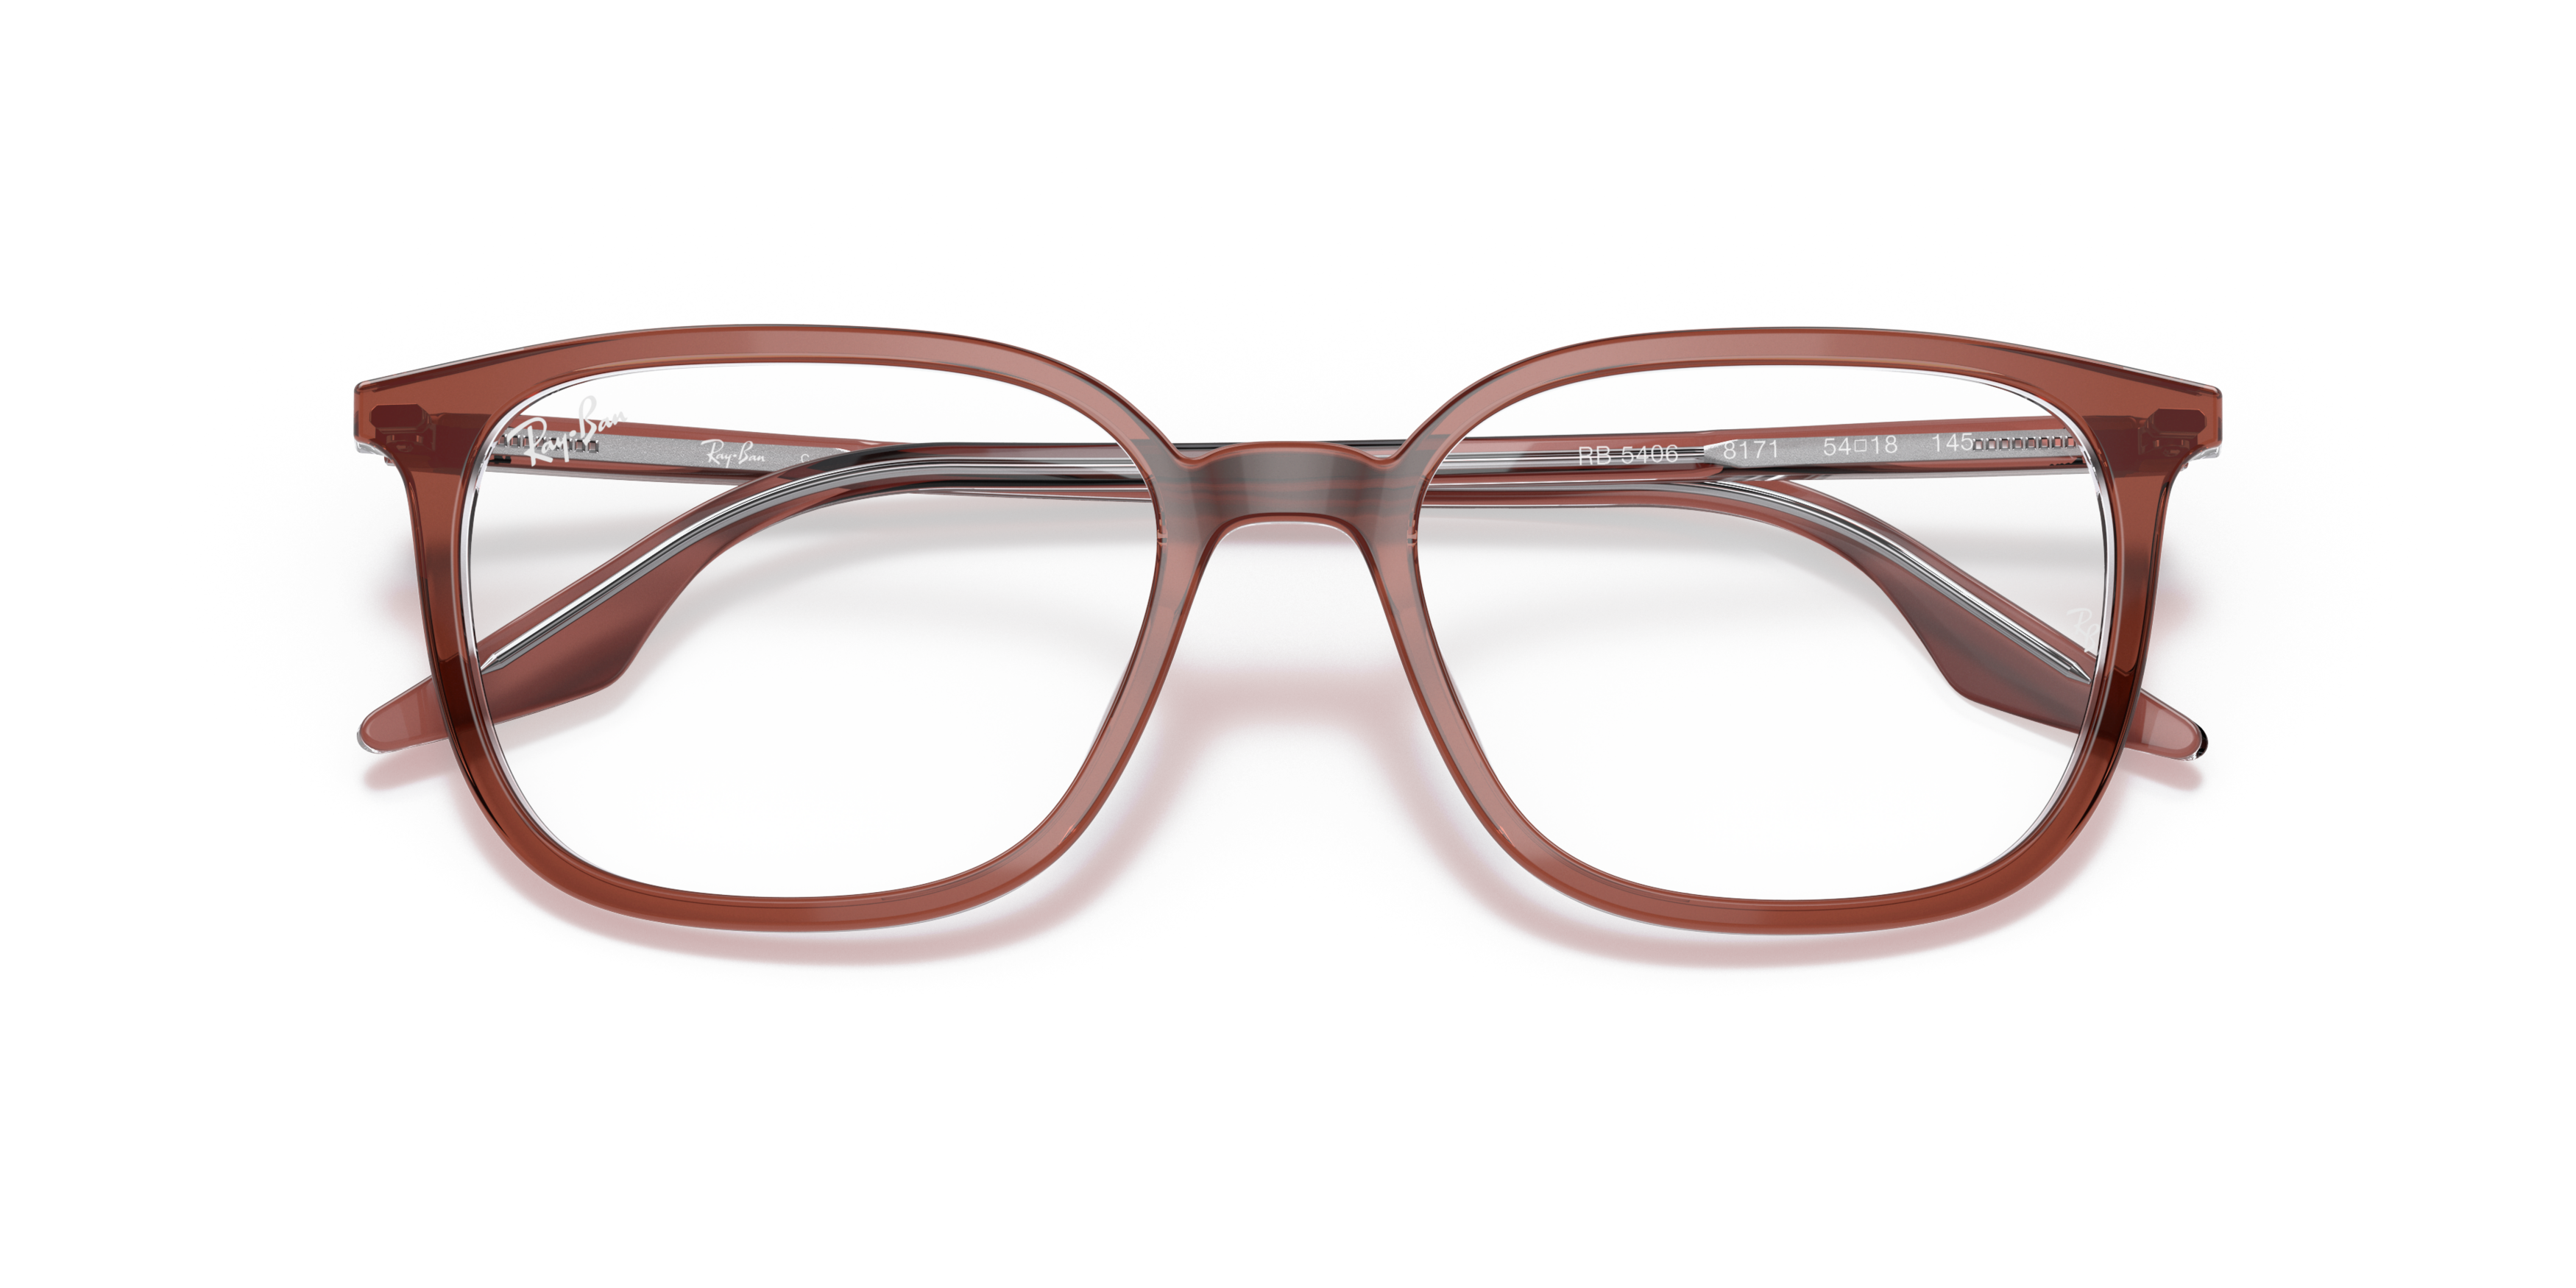 Folded Ray-Ban RX 5406 Glasses Transparent / Black